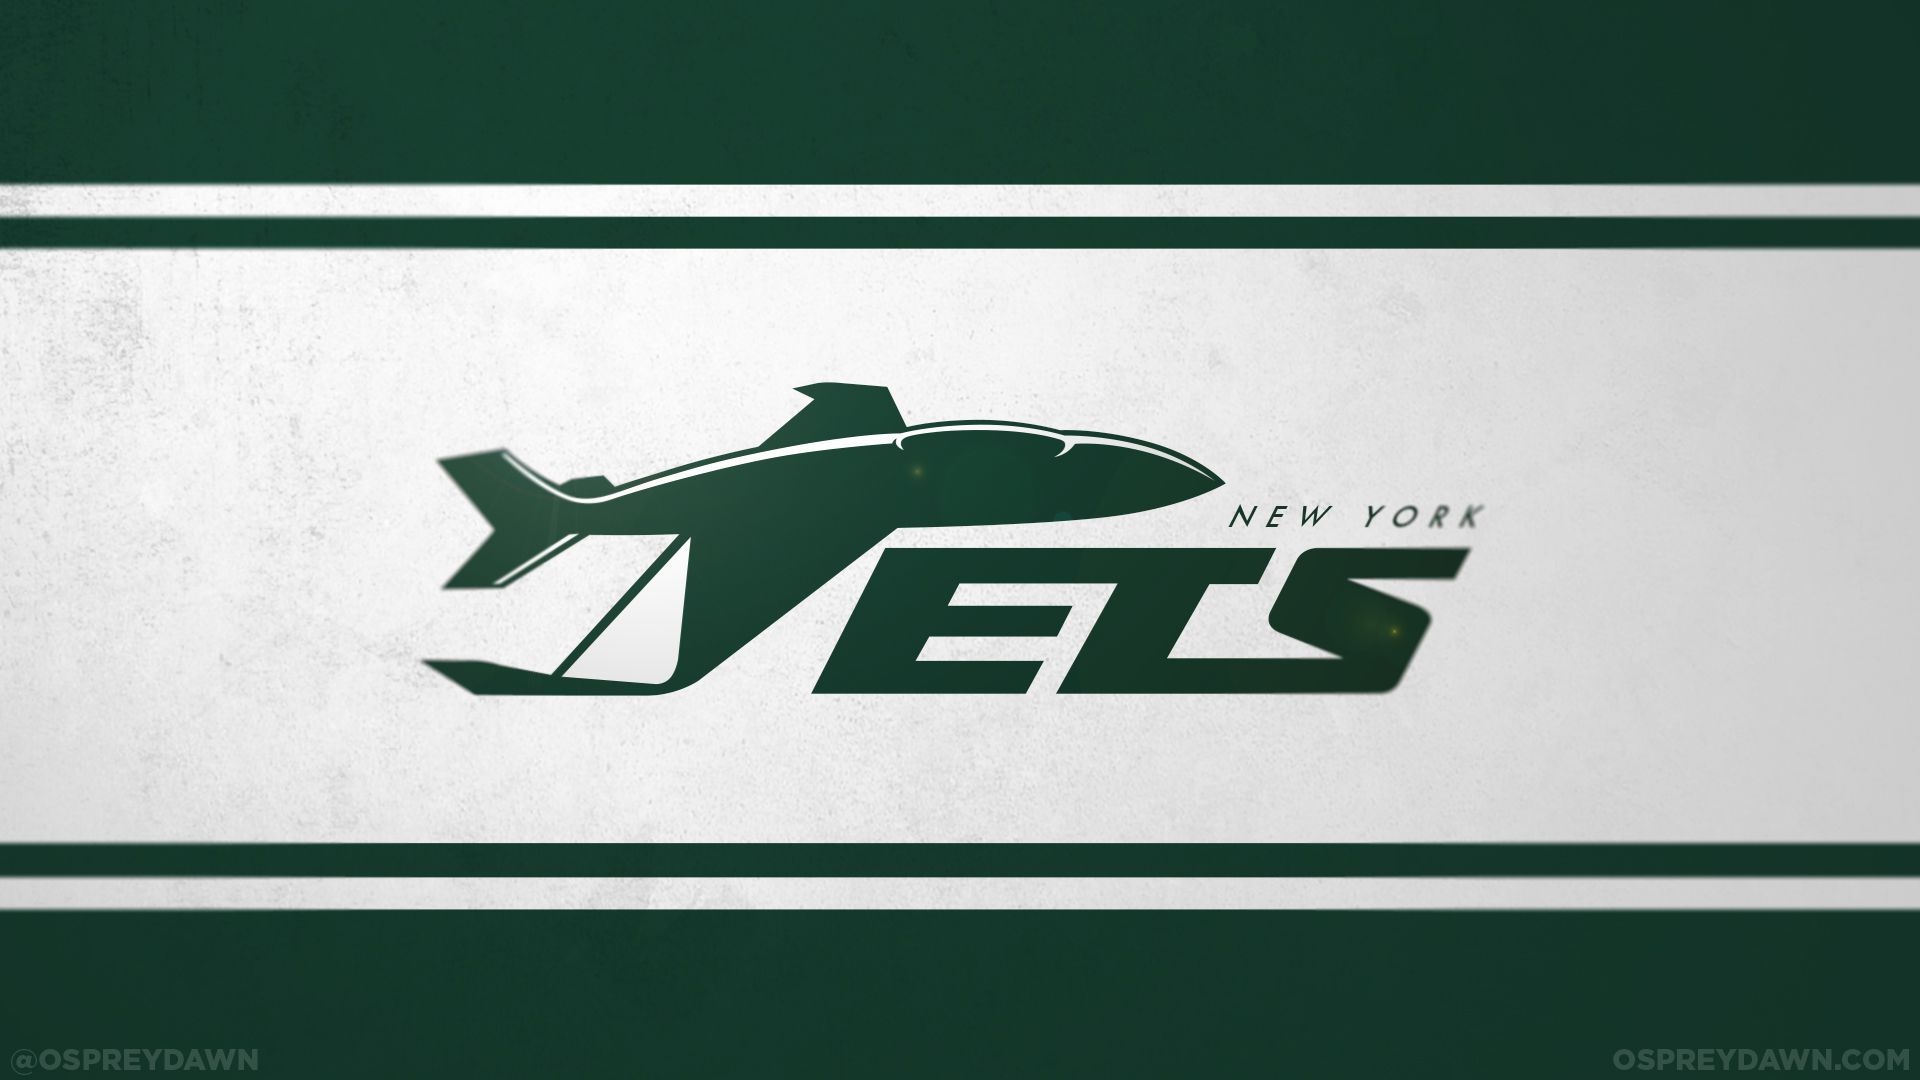 New York Jets wallpaper | 1920x1080 | #73375